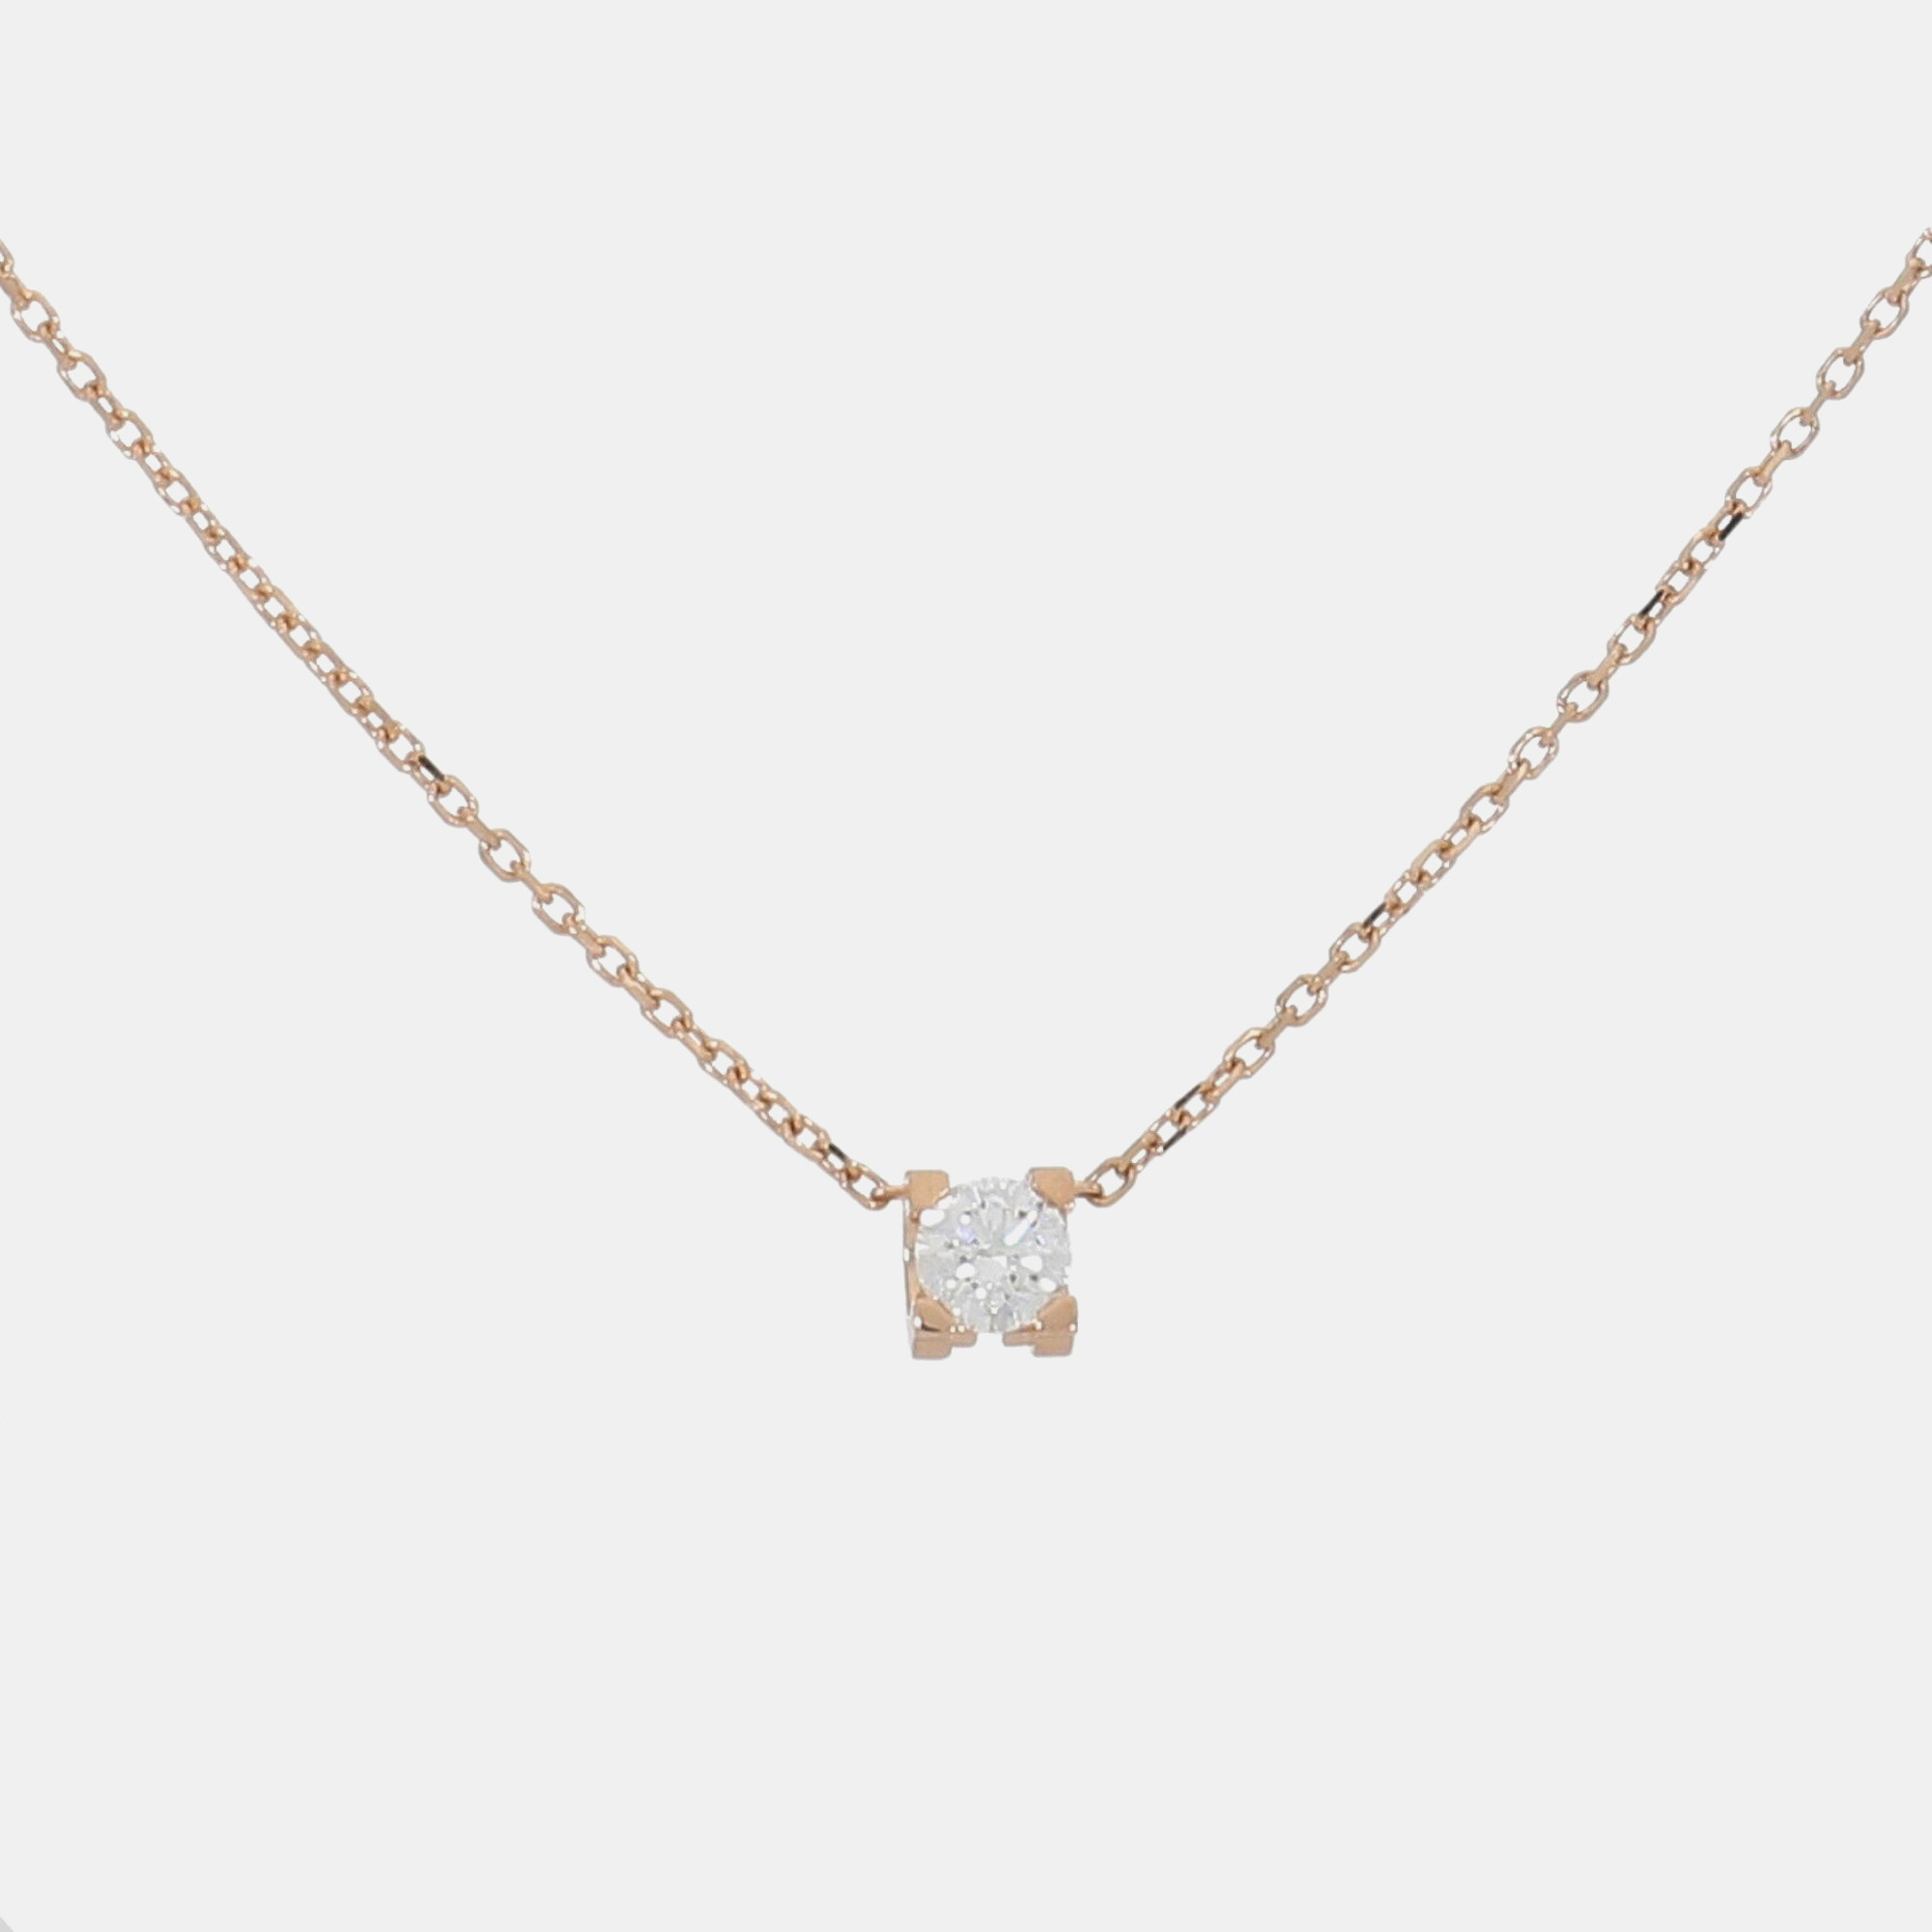 Cartier 18k rose gold and diamond c de cartier pendant necklace